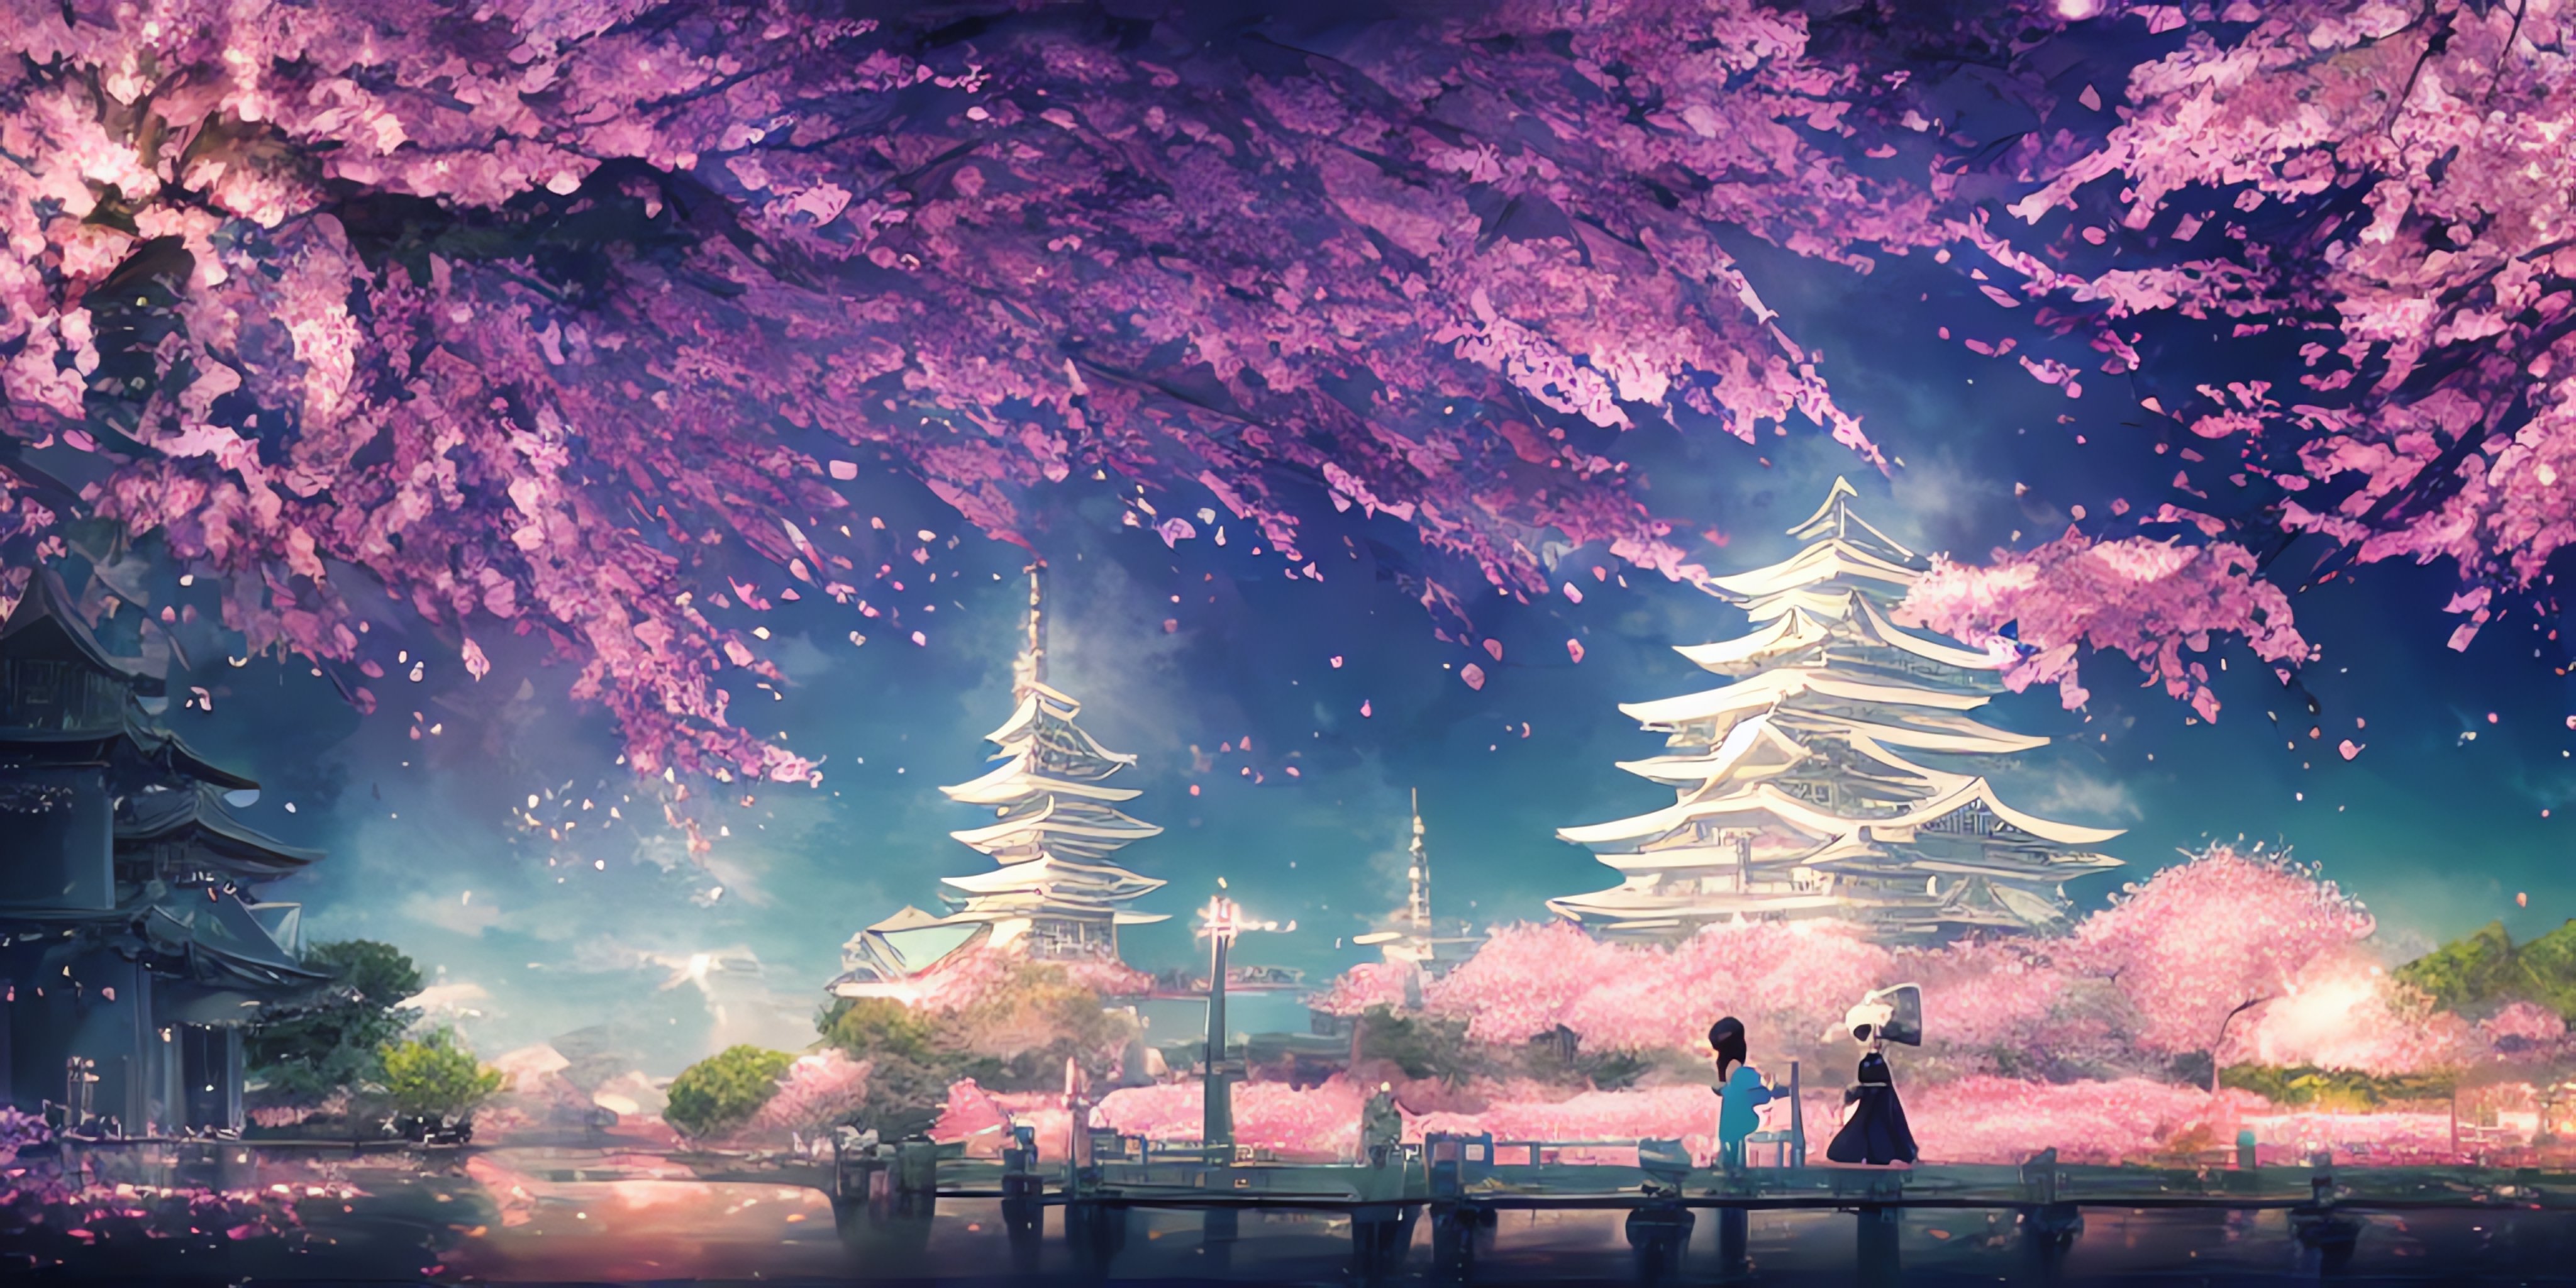 An image of a beautiful landscape, studio ghibli, hatsune miku, fuji-san, cherry blossoms, pagoda, bubble tea, happy fireworks, ornate composition, matte painting